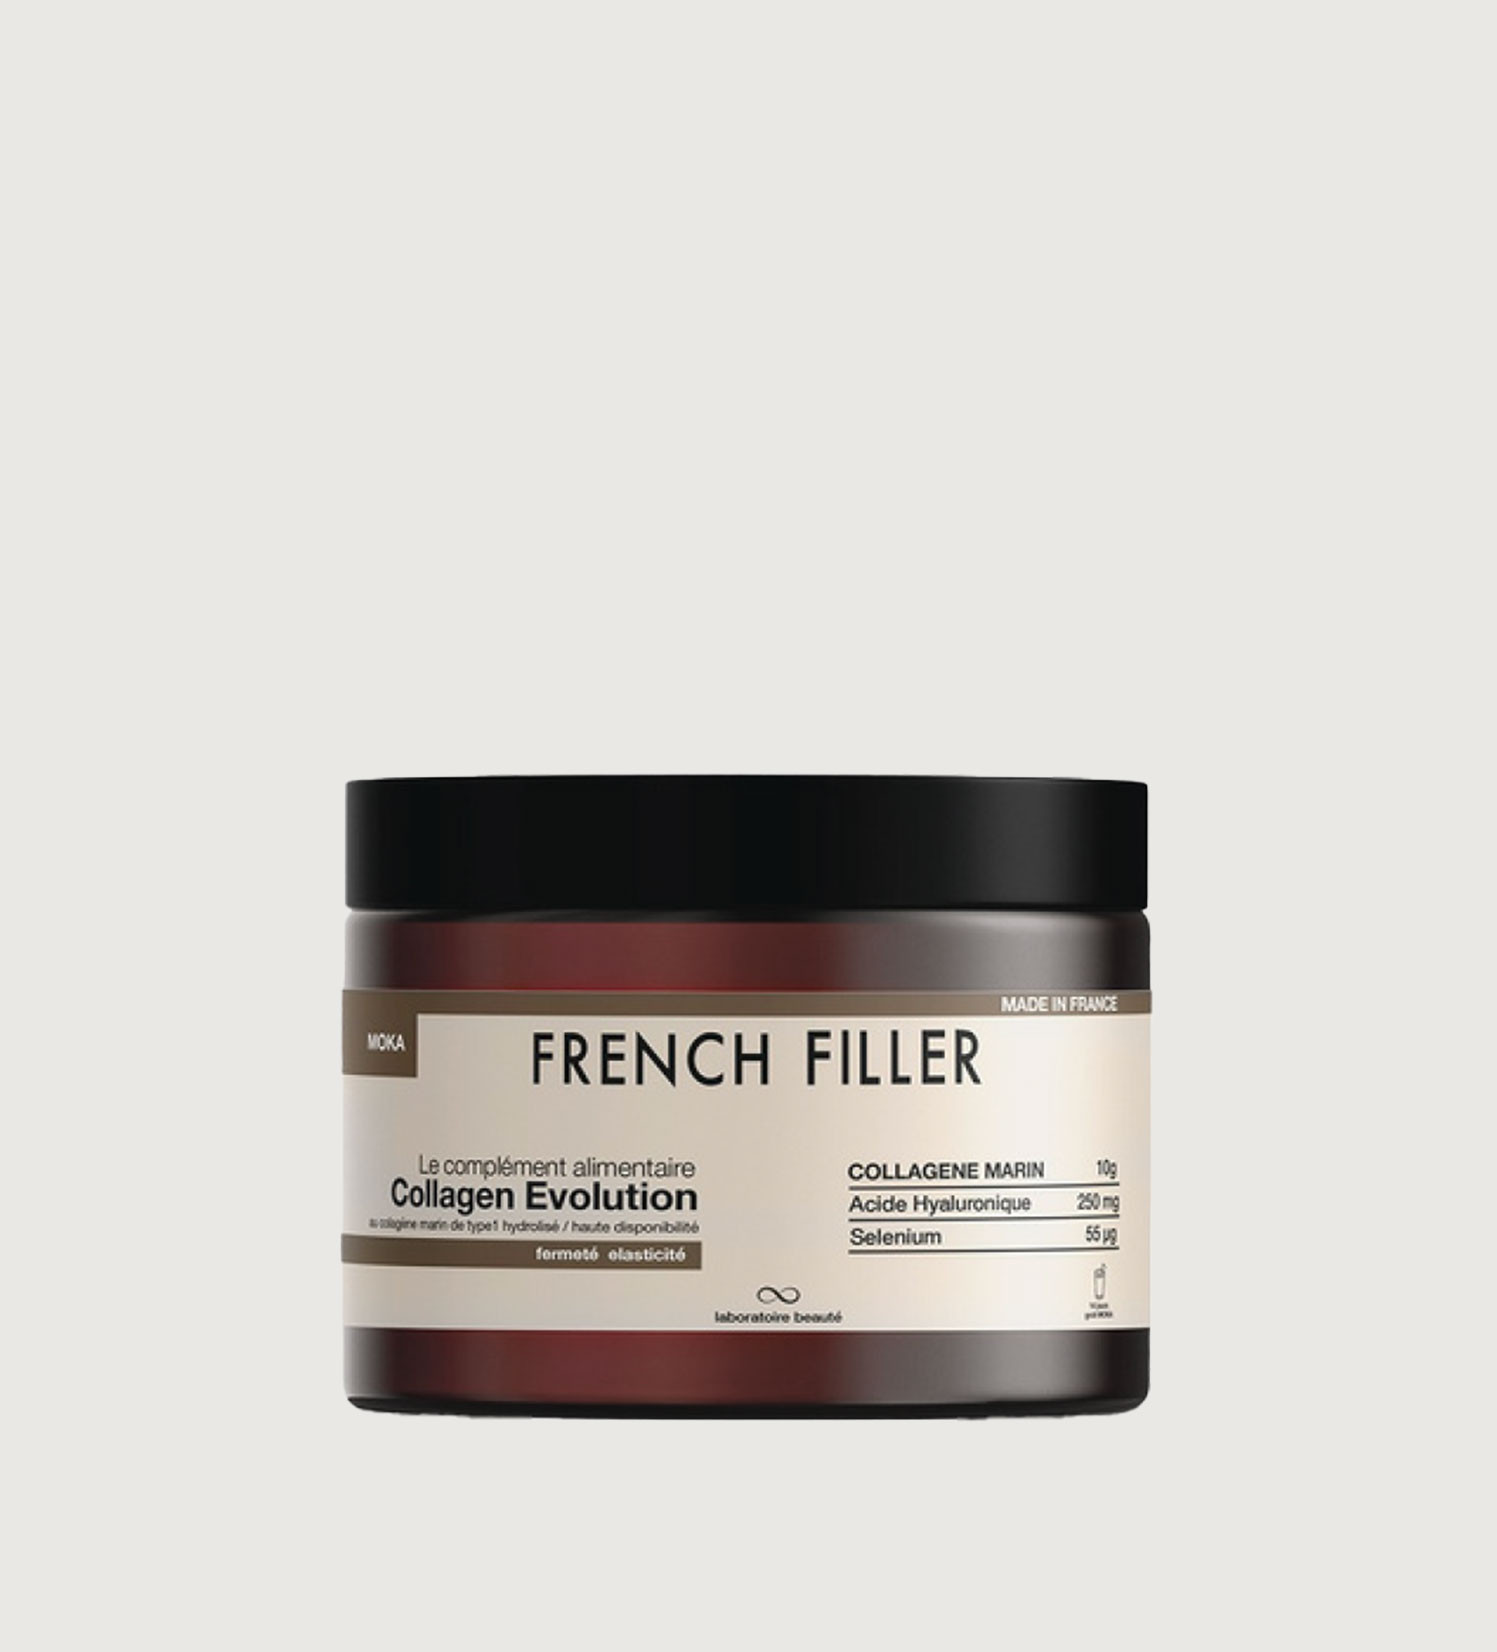 collagene marin poudre hydrolysé bio disponible fabriqué en france French Filler moka Beauty drink